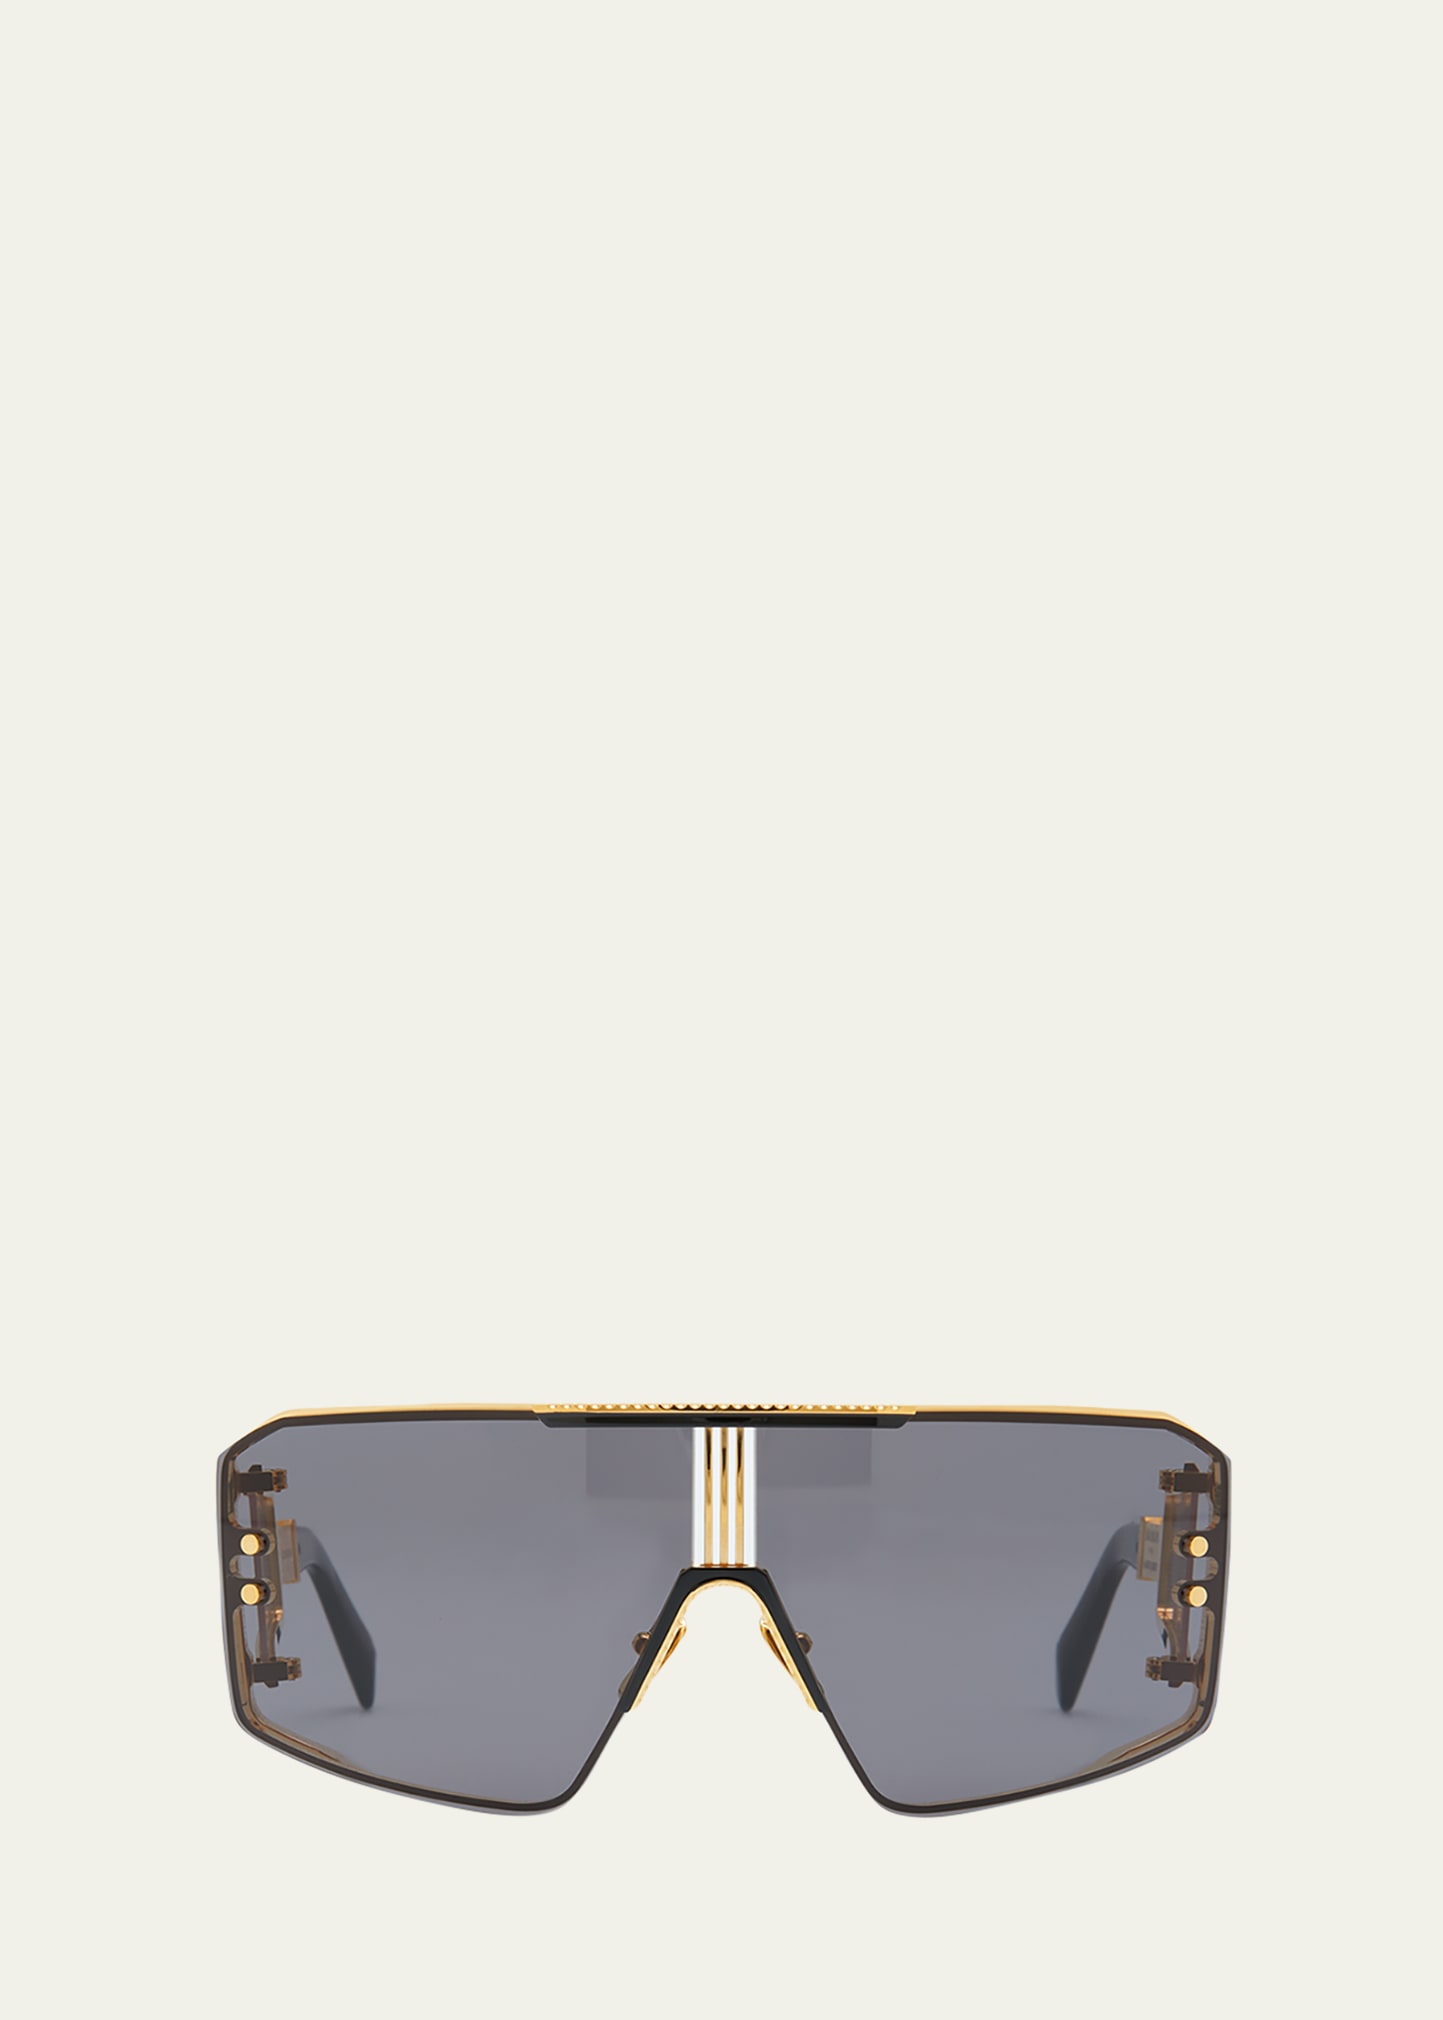 Balmain Le Masque Black Titanium & Acetate Shield Sunglasses In Gld-blk